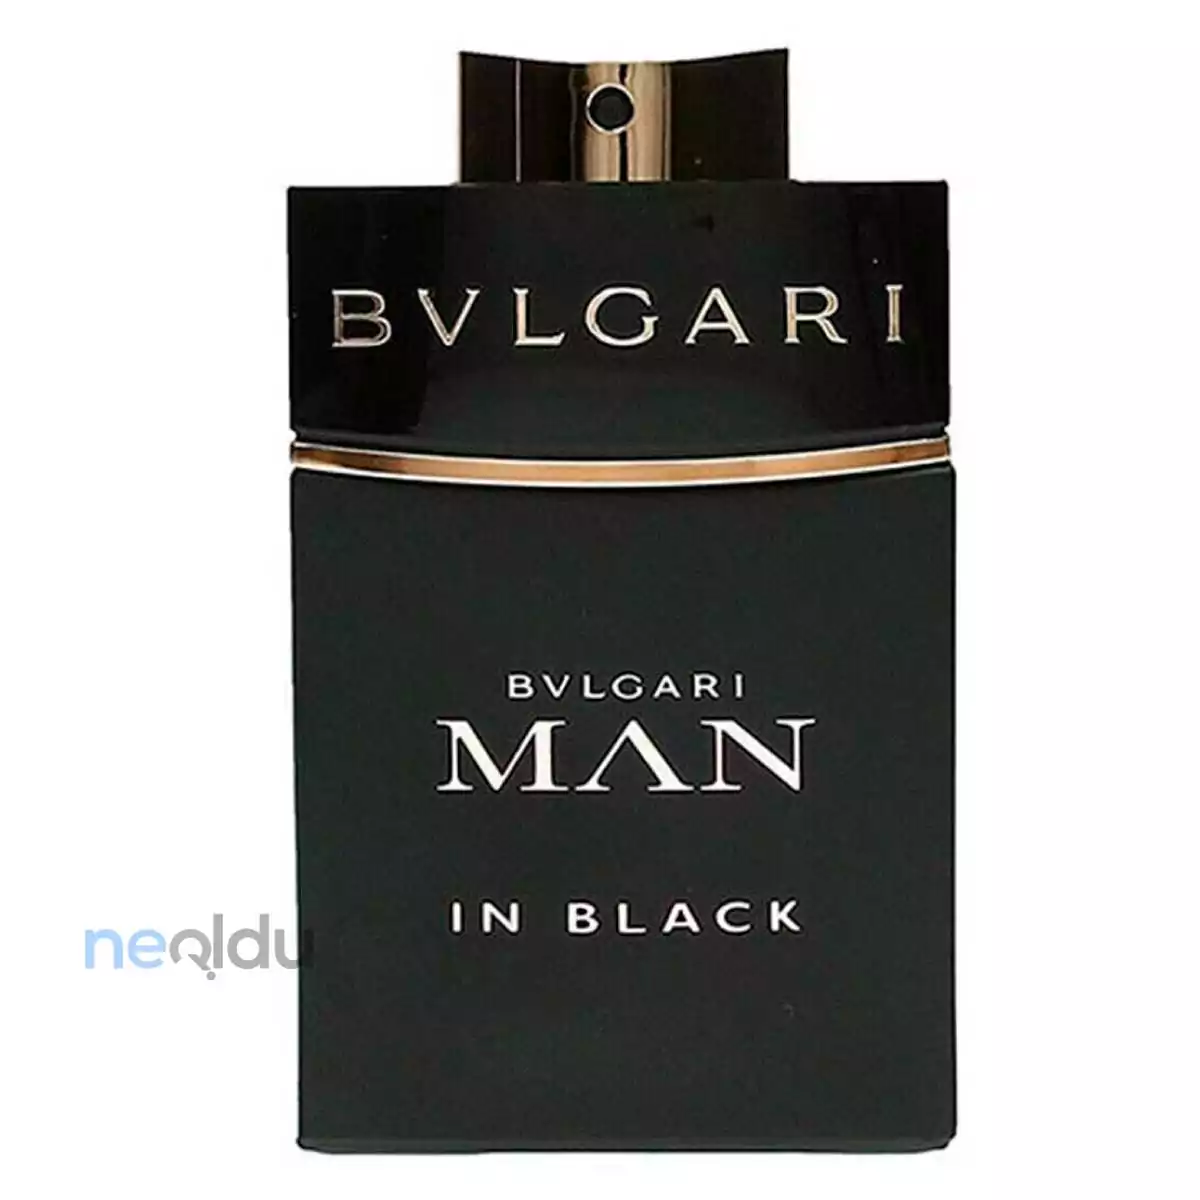 bvlgari-man-in-black